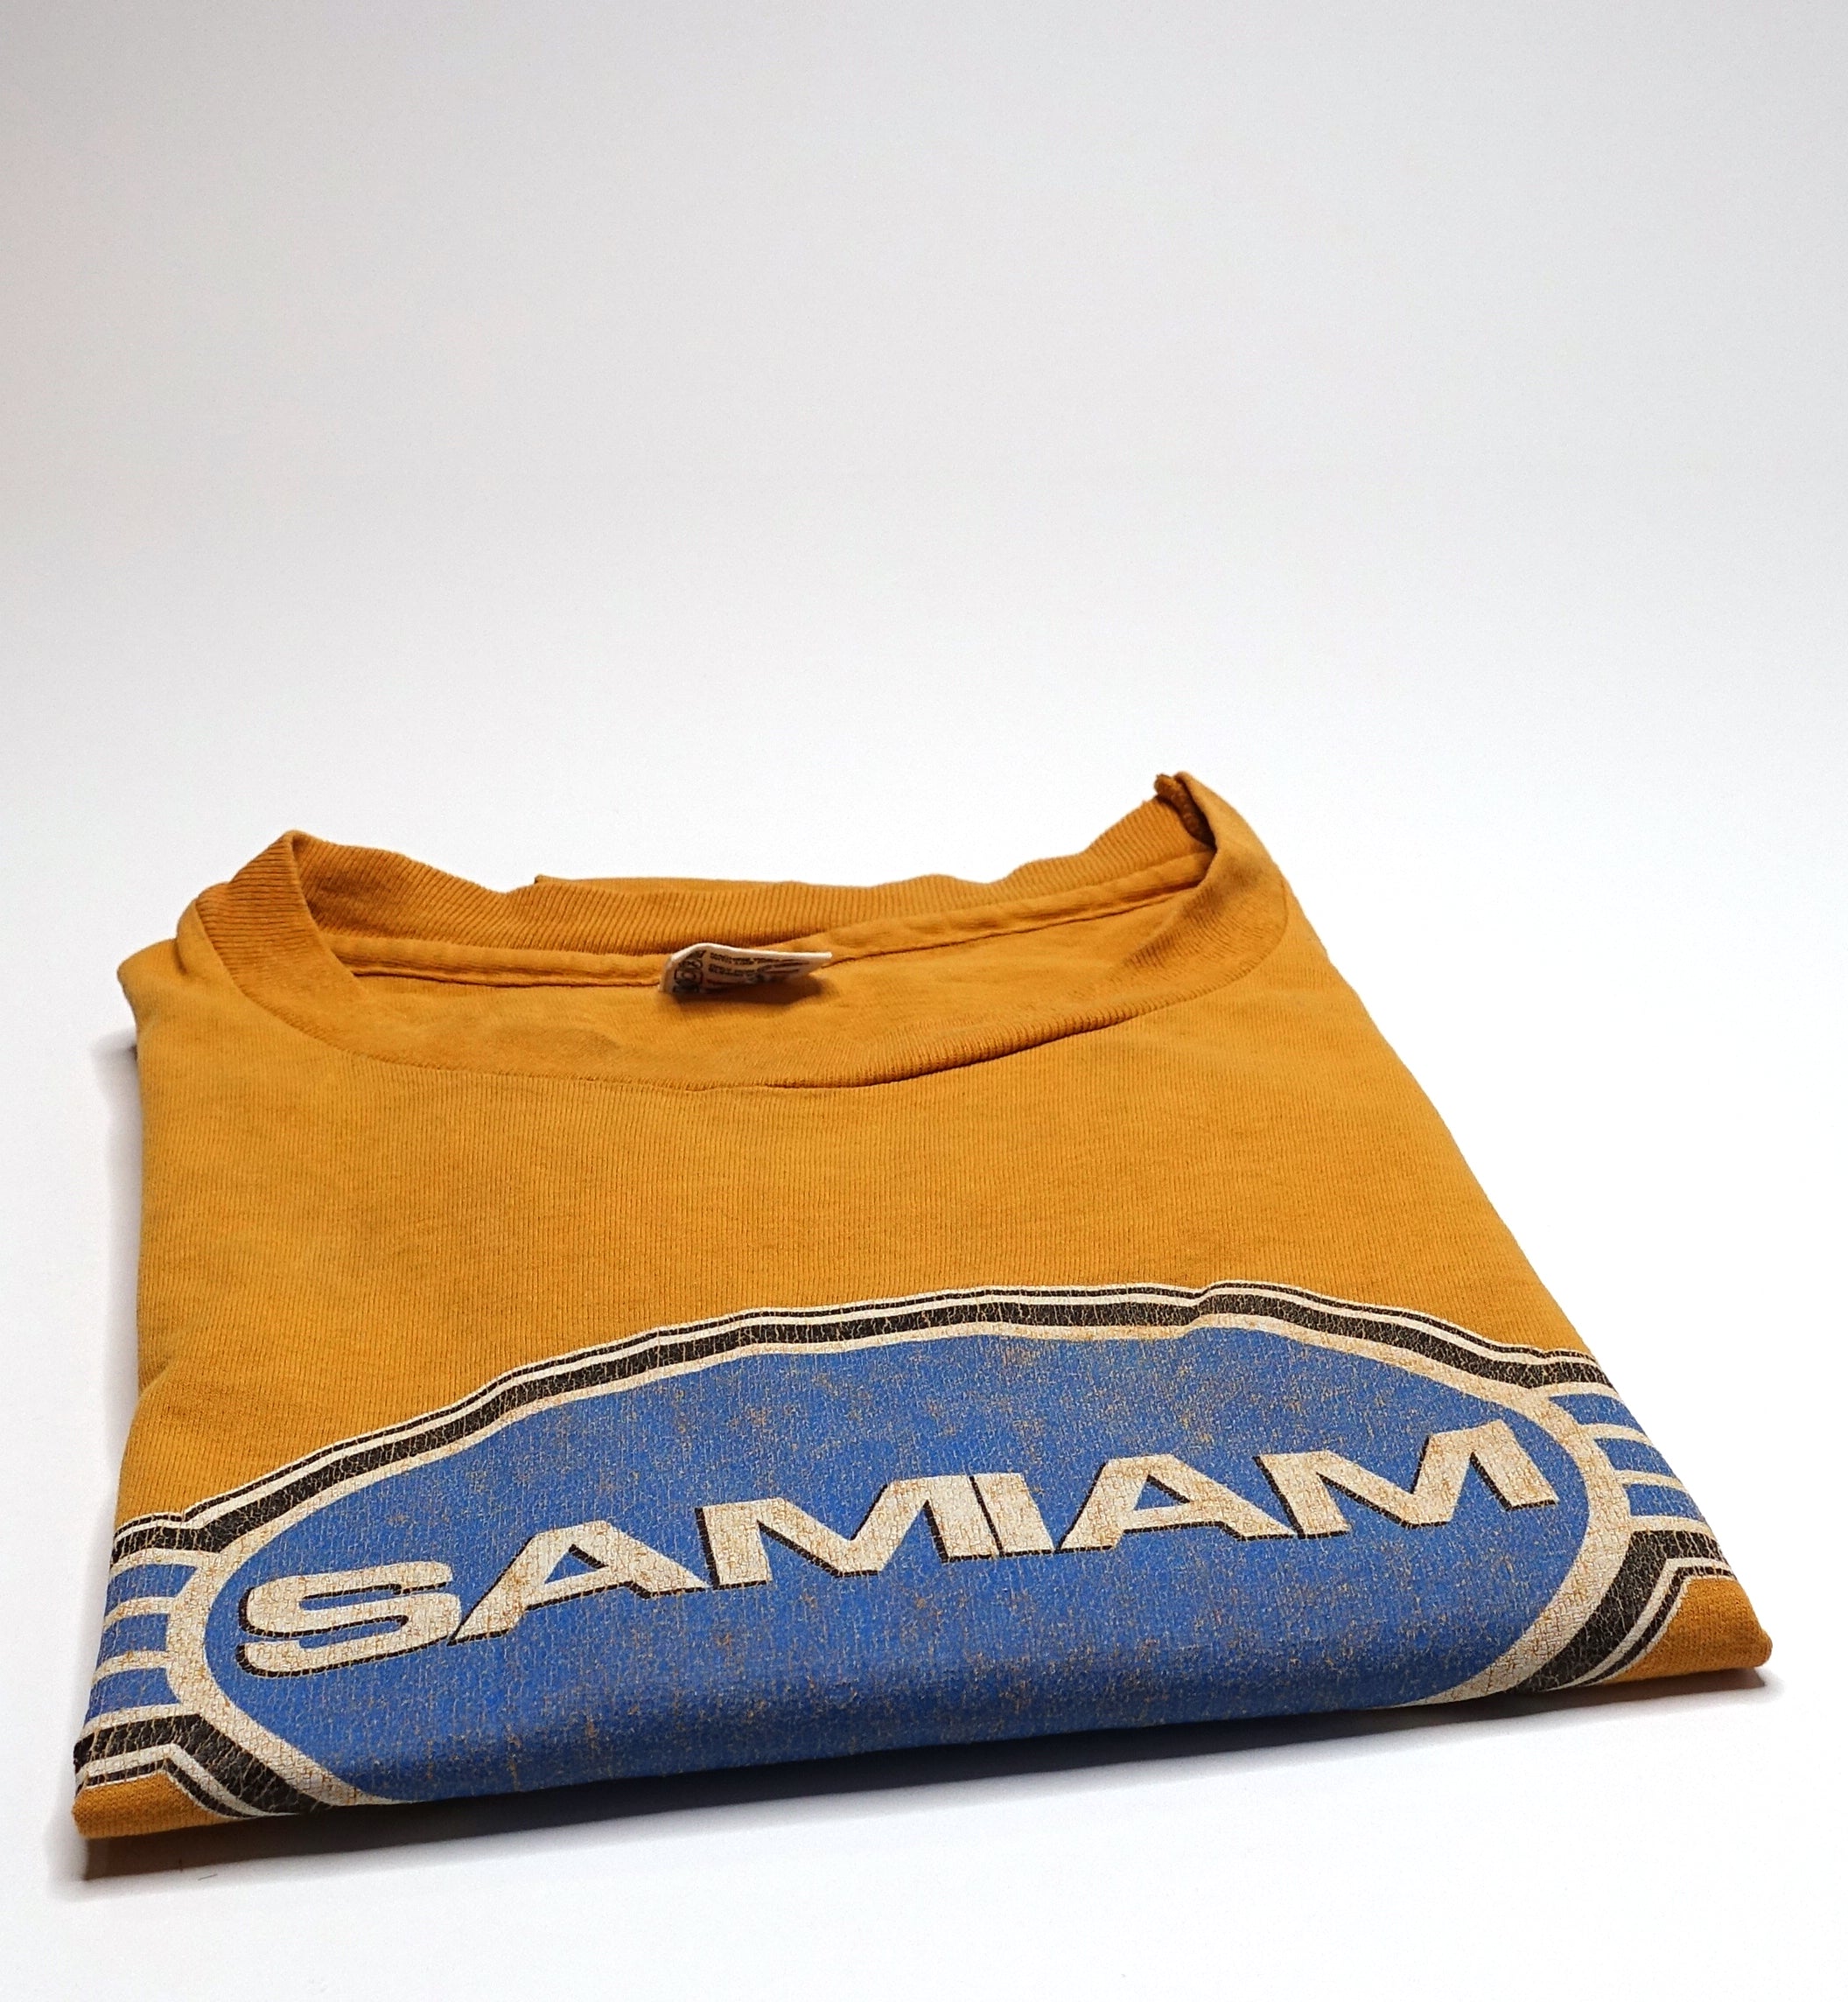 Samiam - Sims Logo / Clumsy 1994 Tour Shirt Size XL